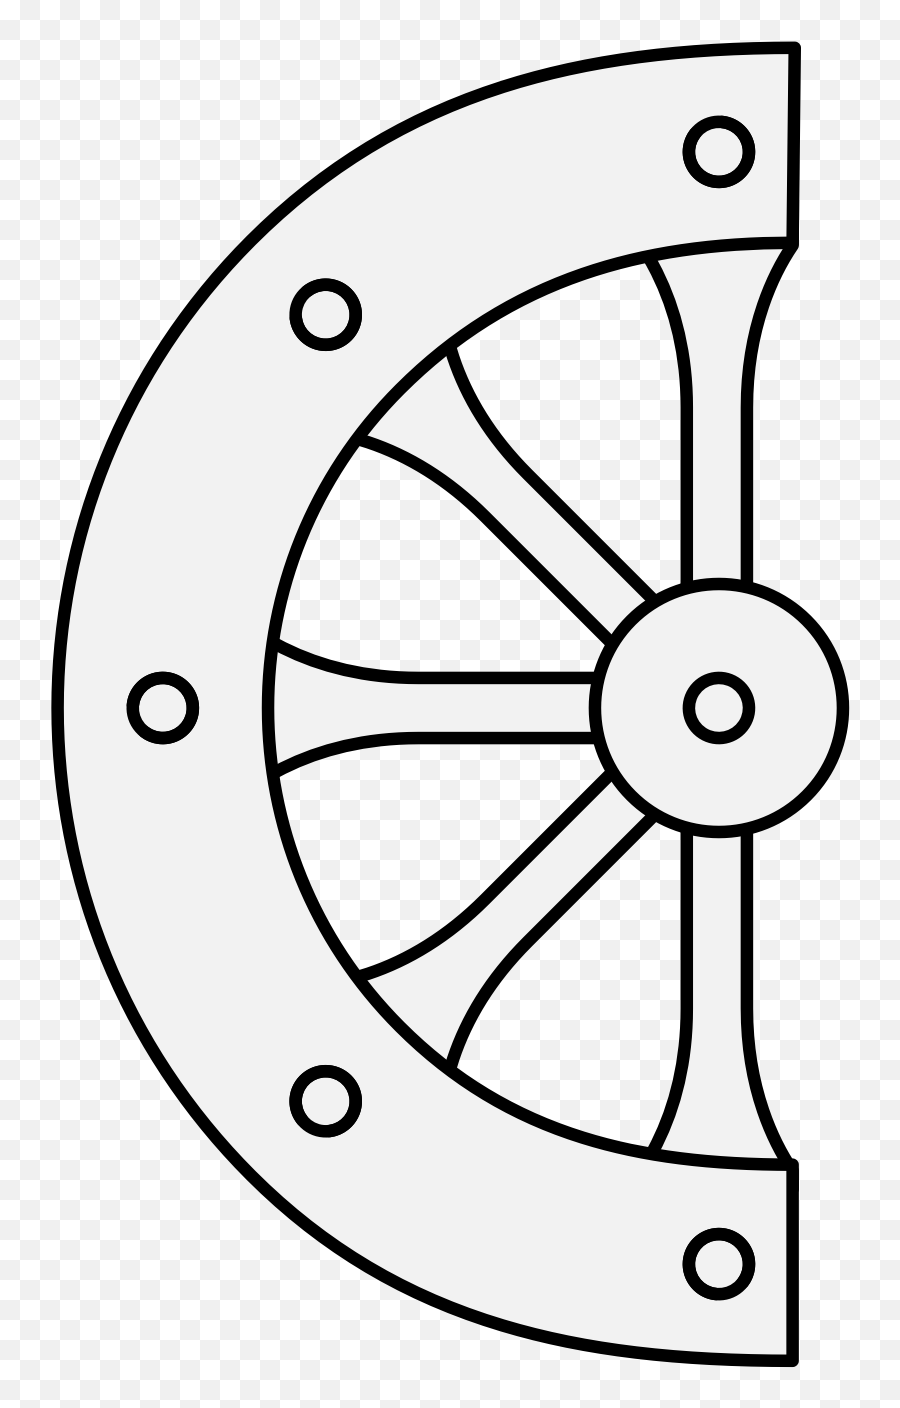 Insignia Florentinorum - Traceable Heraldic Art Heraldic Wheel Png,Wagon Wheel Icon In Autocad